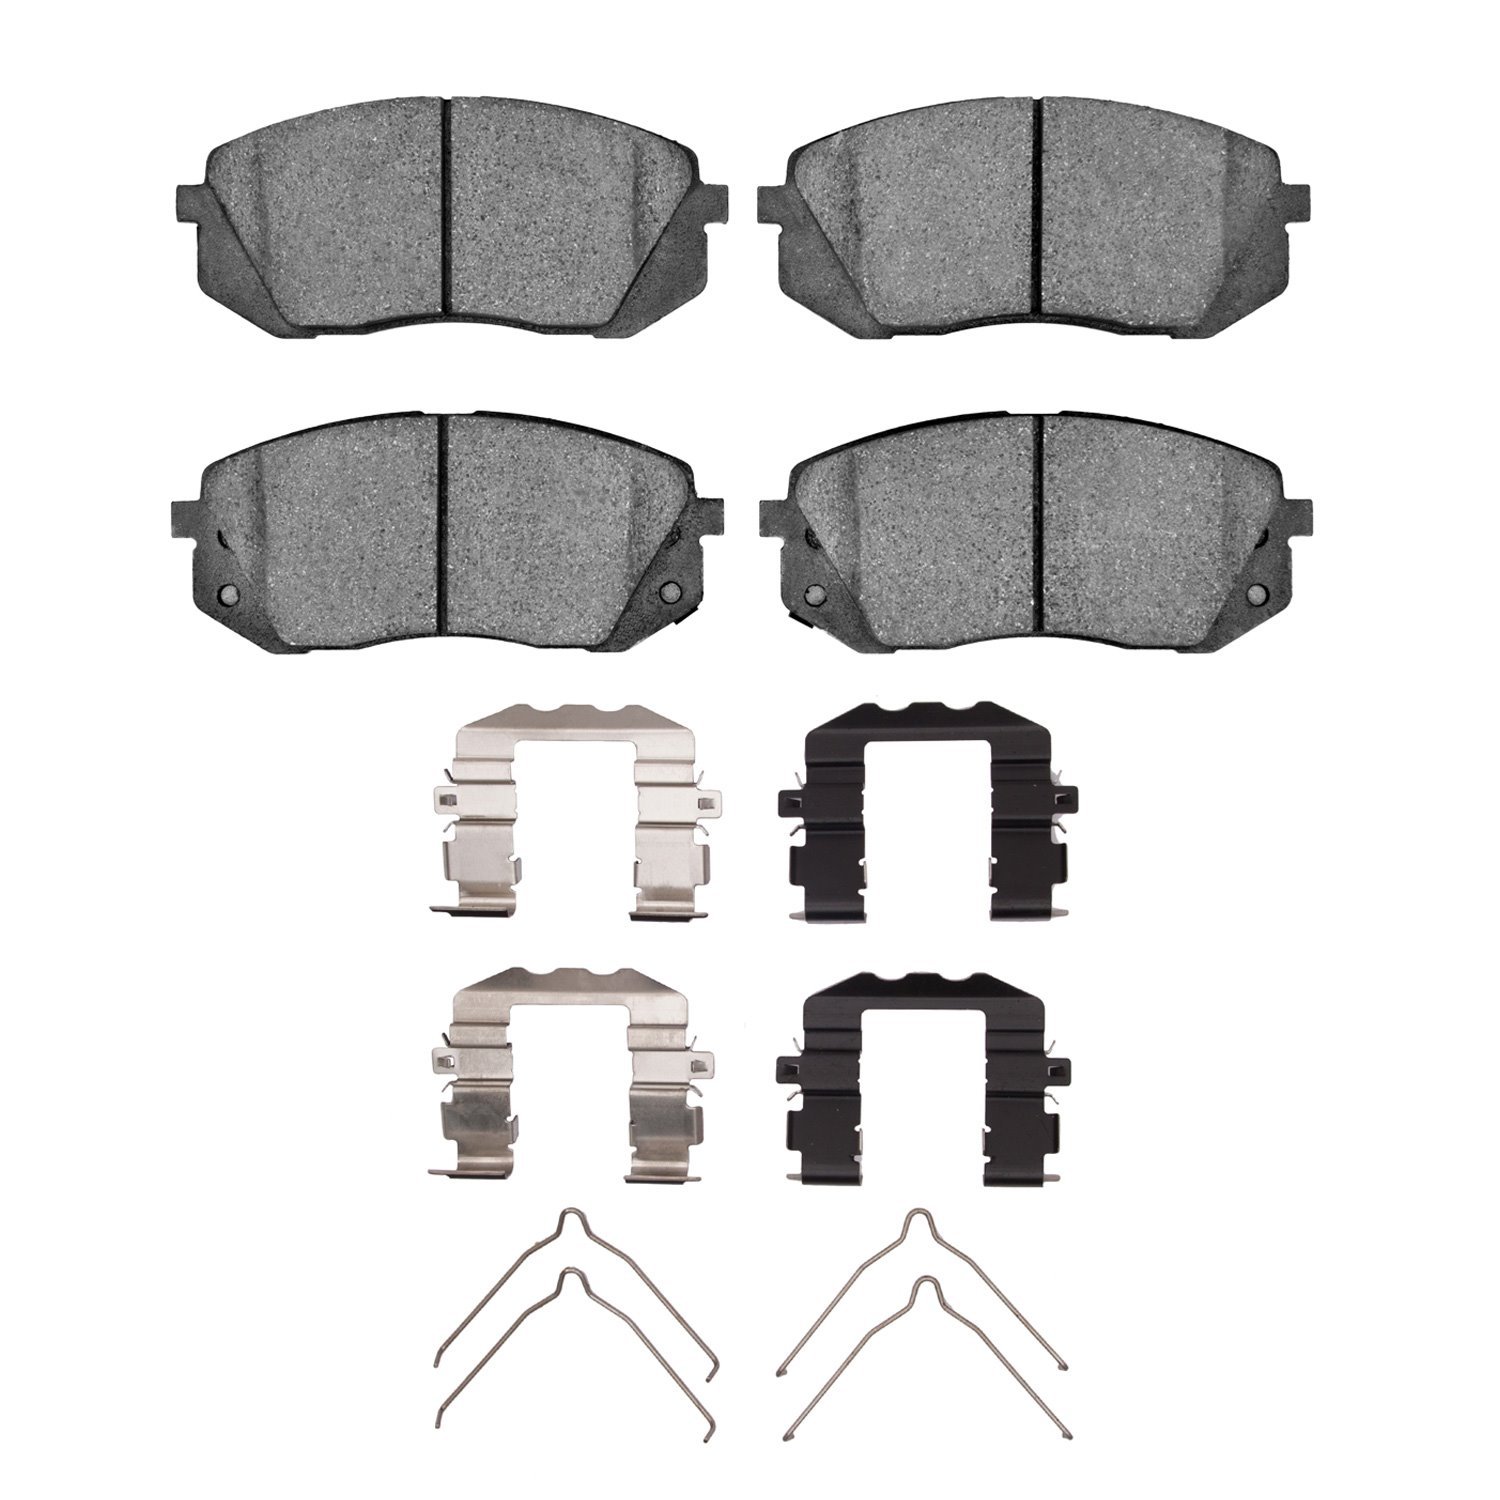 1310-1855-02 3000-Series Ceramic Brake Pads & Hardware Kit, Fits Select Kia/Hyundai/Genesis, Position: Front